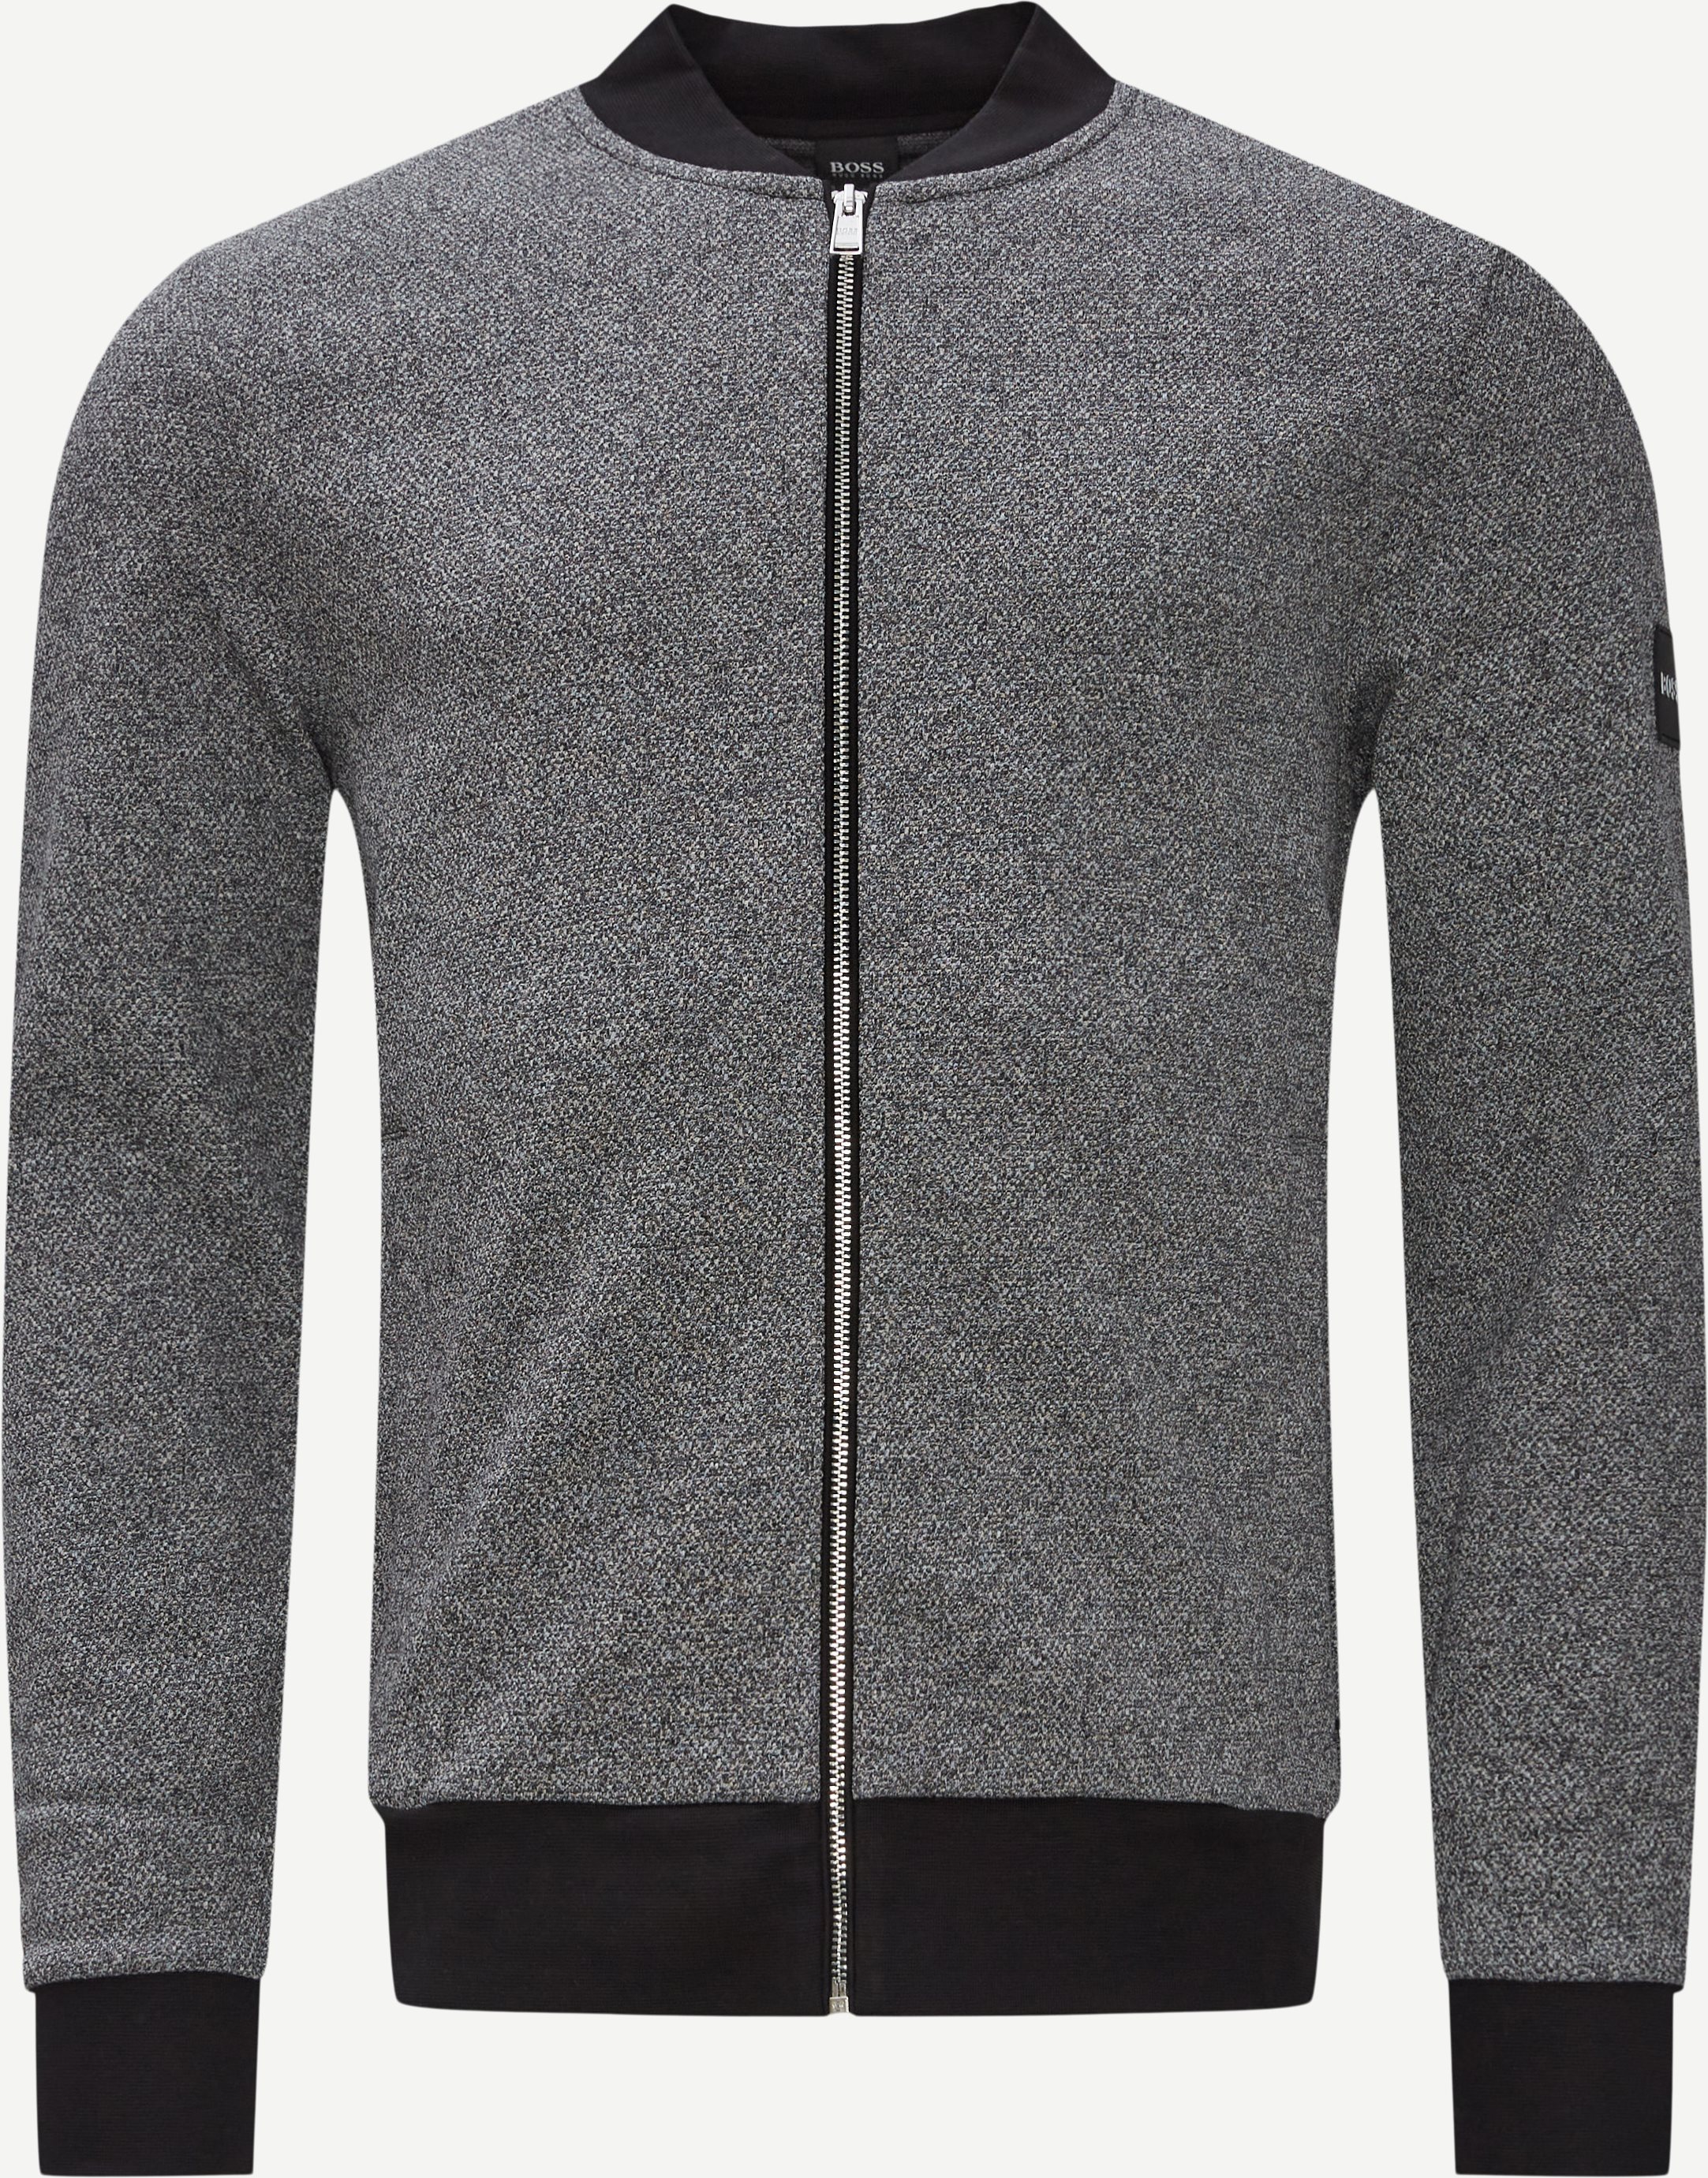 Skiles 41 Cardigan - Sweatshirts - Regular fit - Black